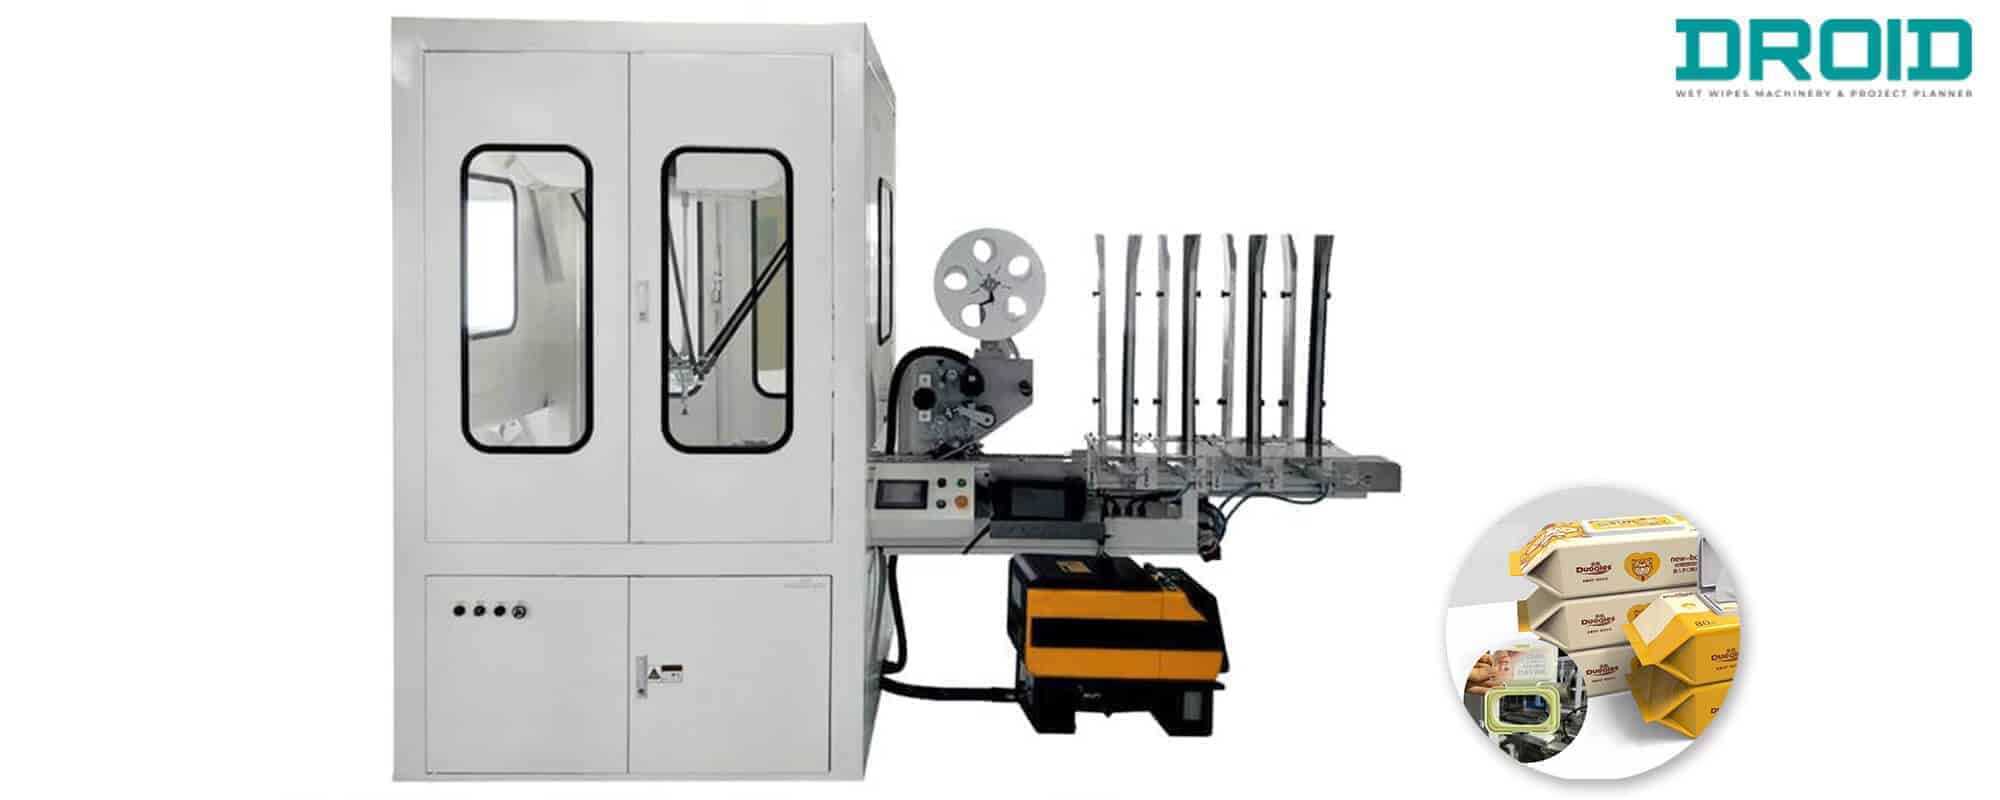 DH L300 Robotic Wet Wipes Lid Applicator - DH-250 Single Sachet Wet Wipes Machine